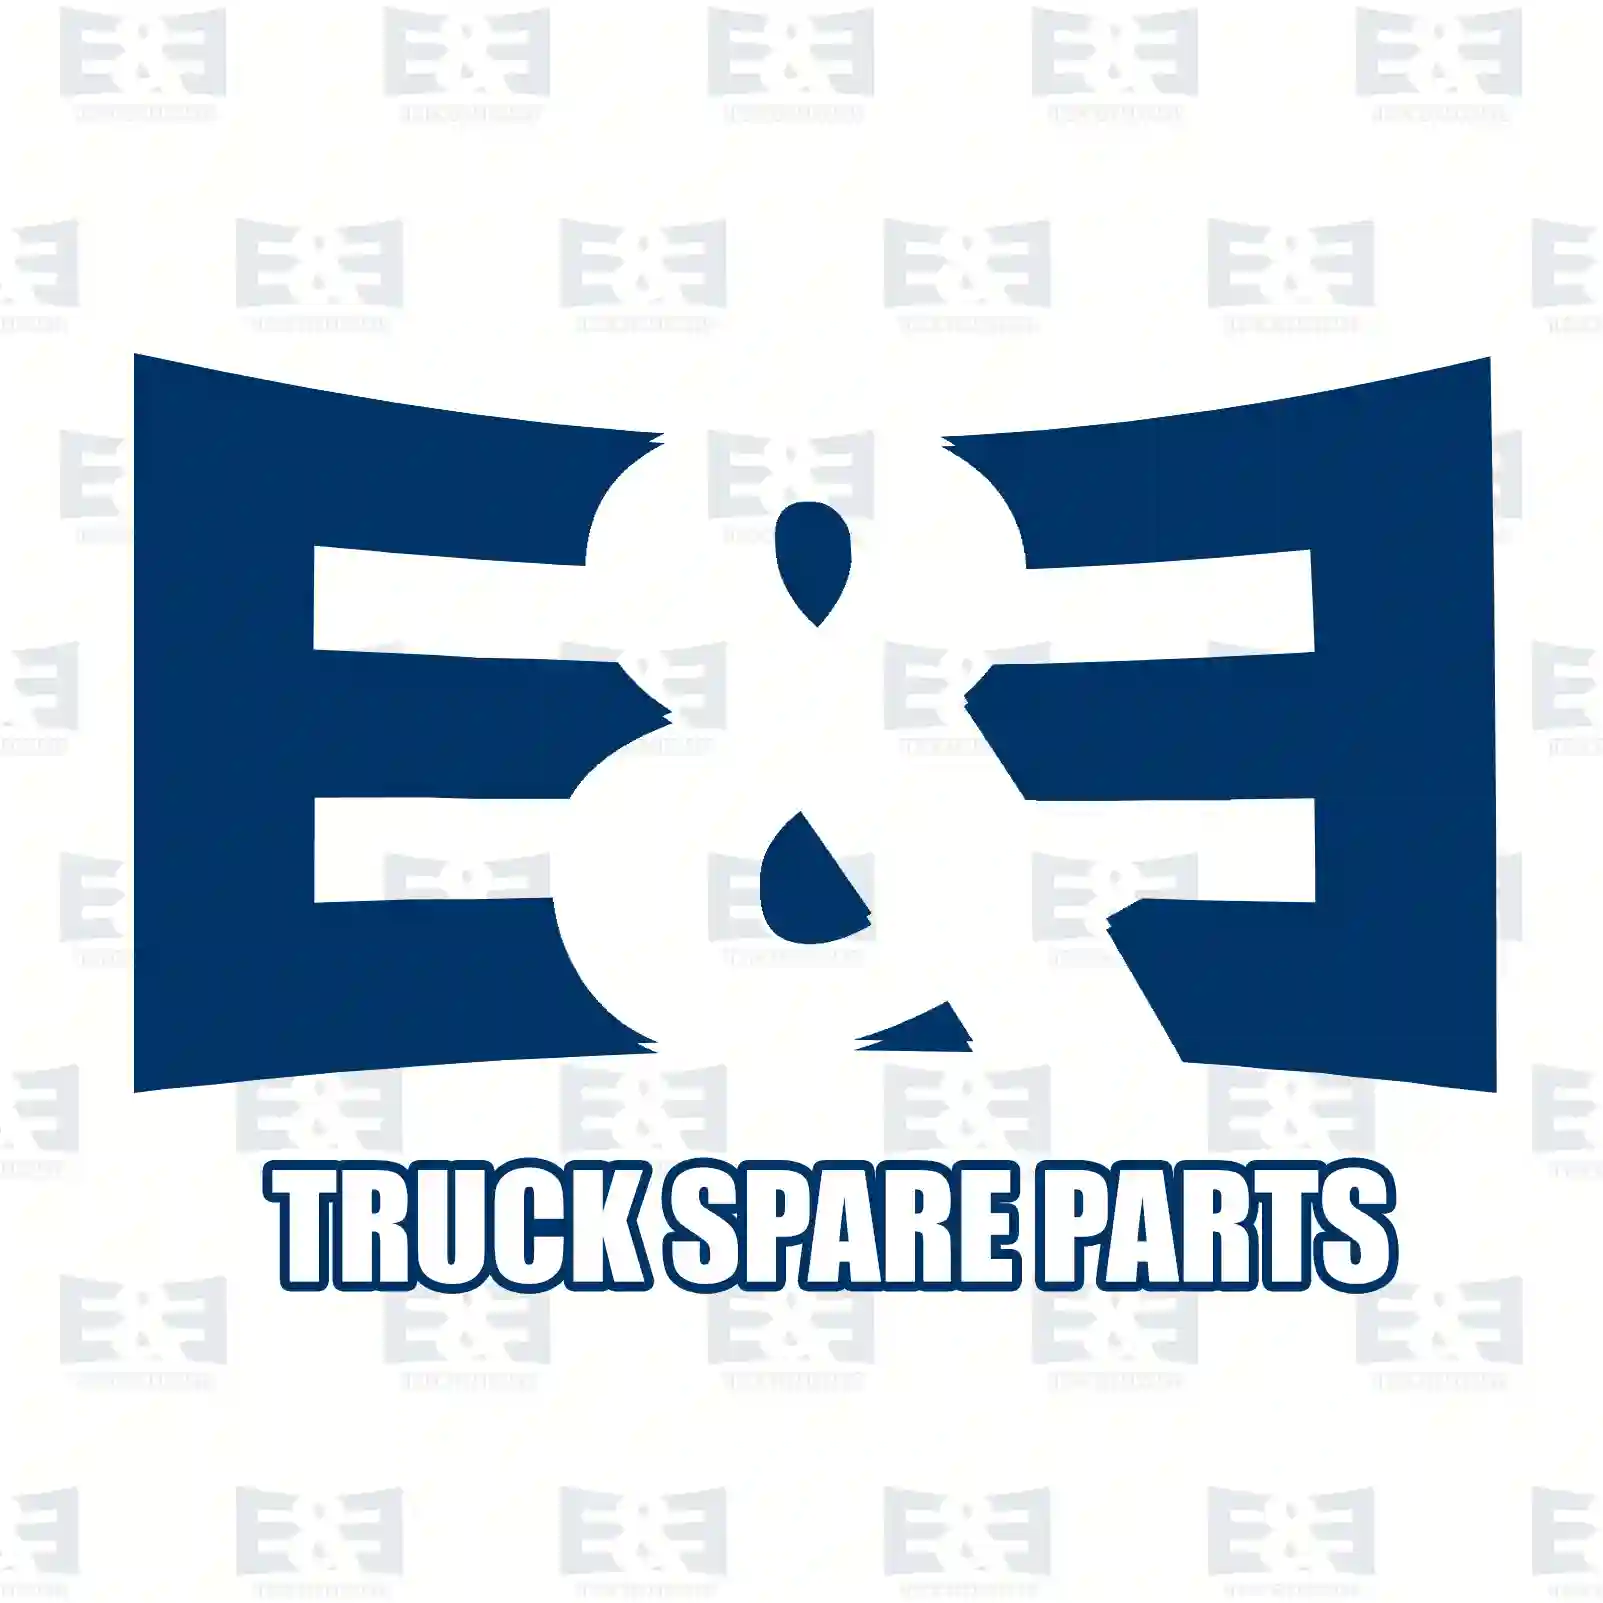 Clutch cylinder, 2E2289137, 81307166089, 813 ||  2E2289137 E&E Truck Spare Parts | Truck Spare Parts, Auotomotive Spare Parts Clutch cylinder, 2E2289137, 81307166089, 813 ||  2E2289137 E&E Truck Spare Parts | Truck Spare Parts, Auotomotive Spare Parts